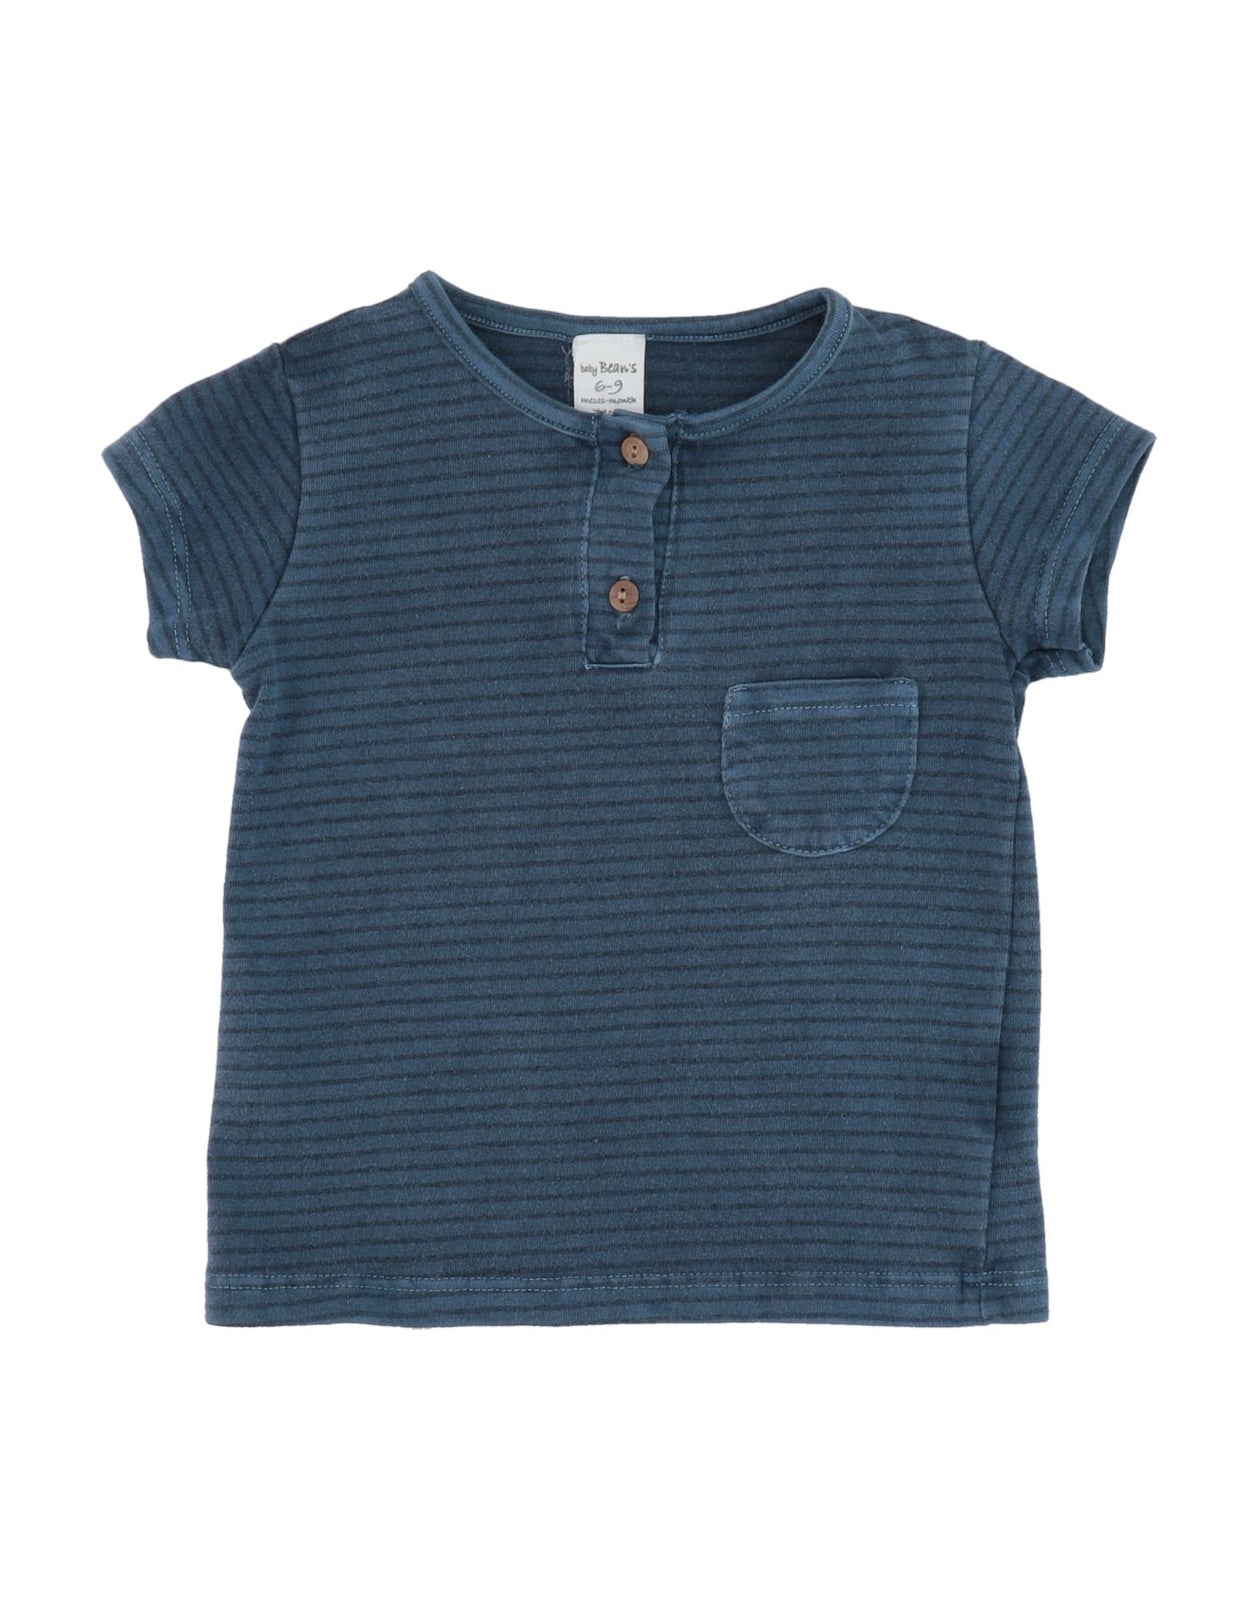 BEAN'S T-Shirt Top Size 6-9M / 74CM Striped Garment Dye gallery main photo